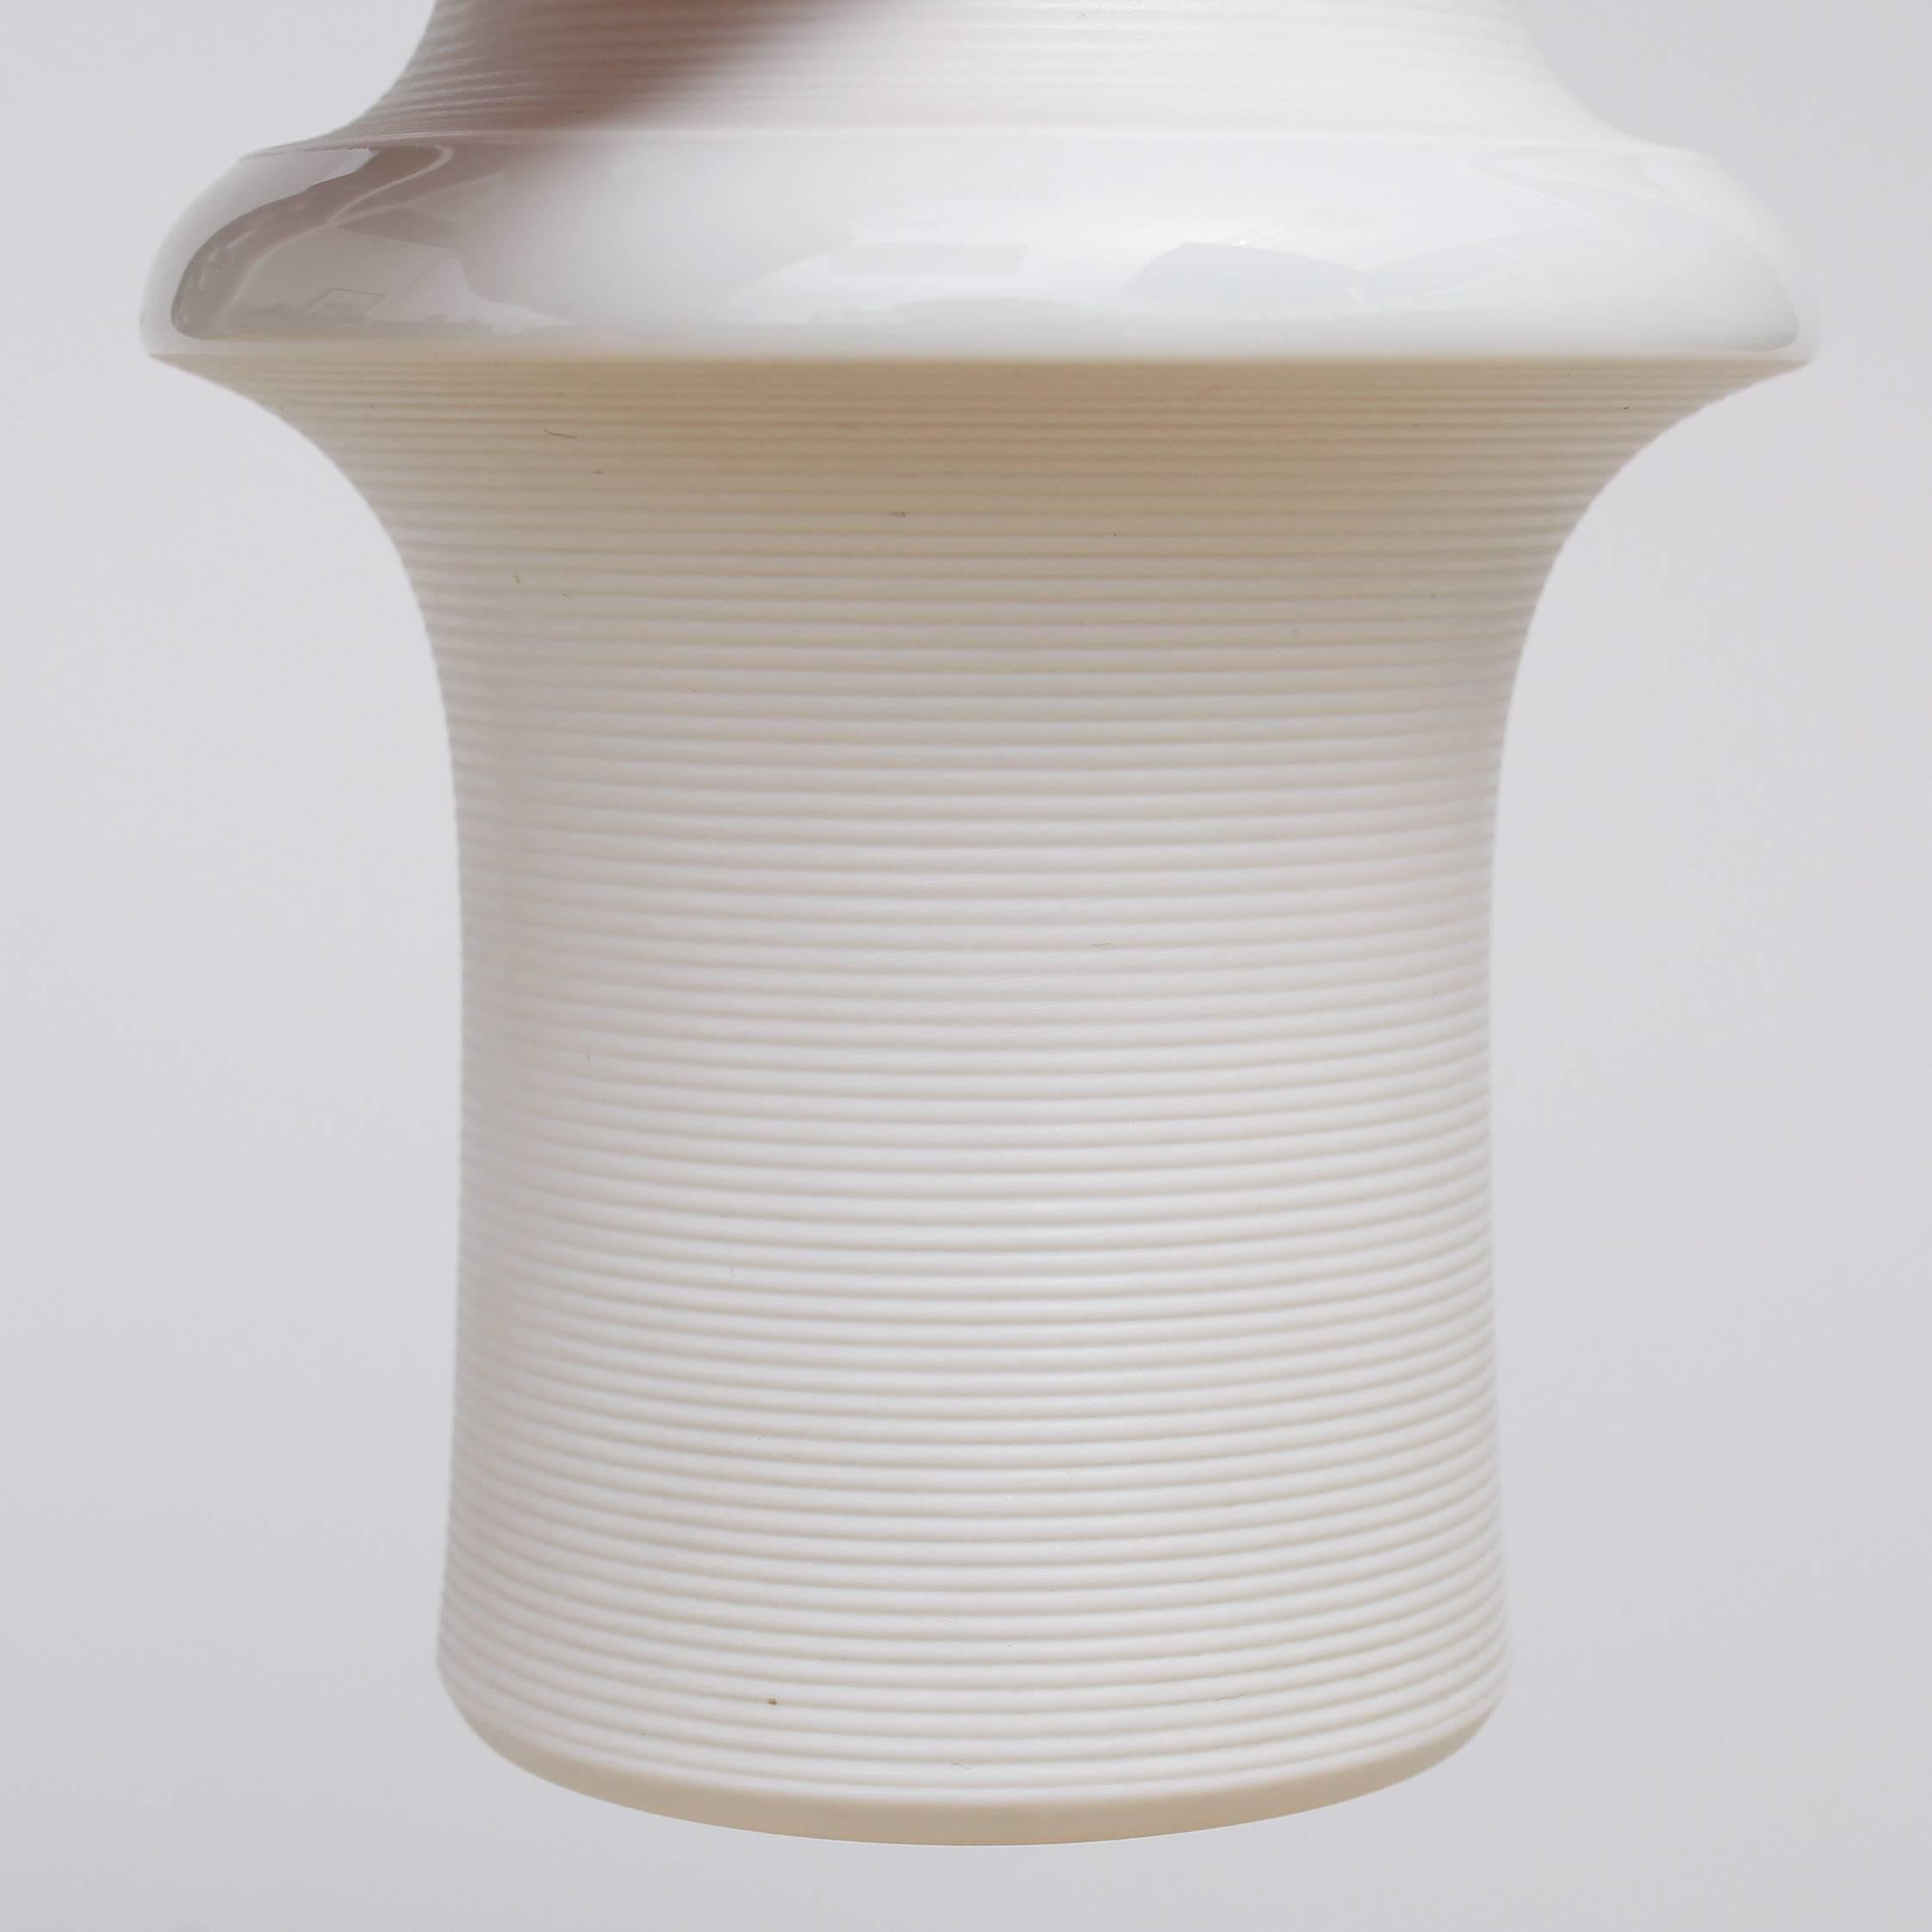 White-glazed porcelain vase, design Tapio Wirkkala, circa 1960,
executed by Rosenthal / Germany.